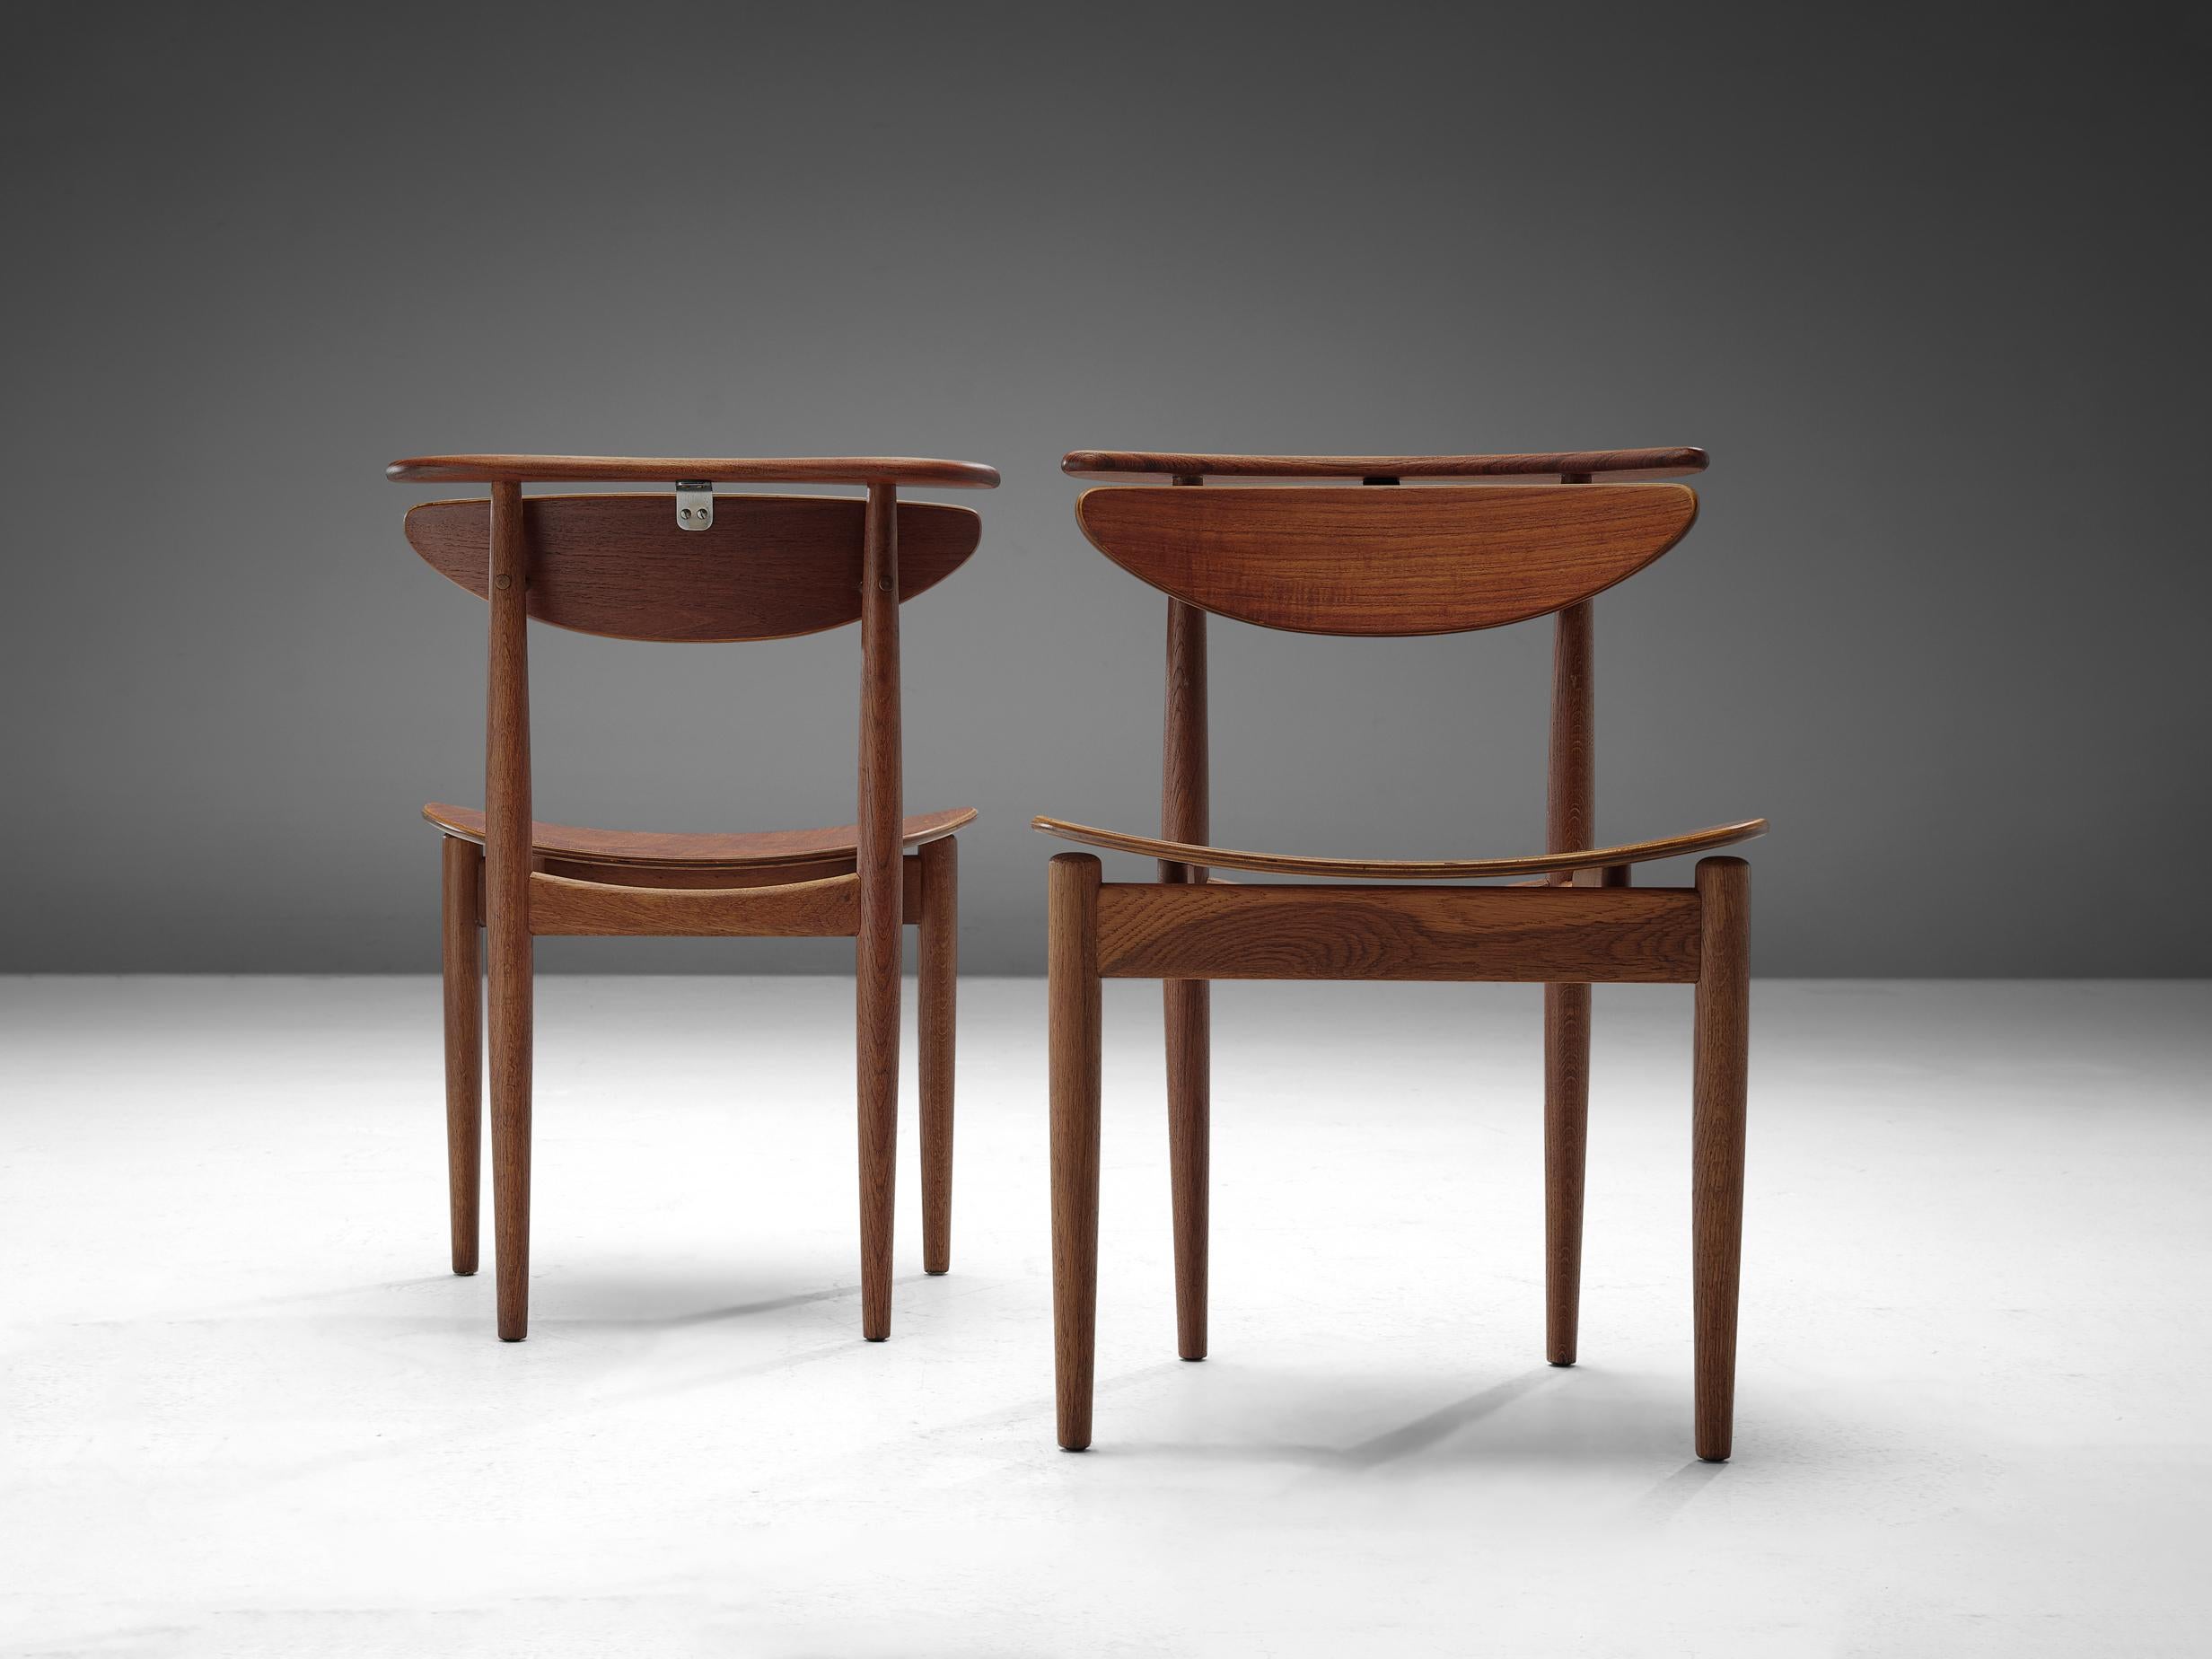 Finn Juhls pour Bovirke, chaises de salle à manger 'reading', chêne, teck, métal, Danemark, 1953.

En 1953, Finn Juhls a conçu cette 